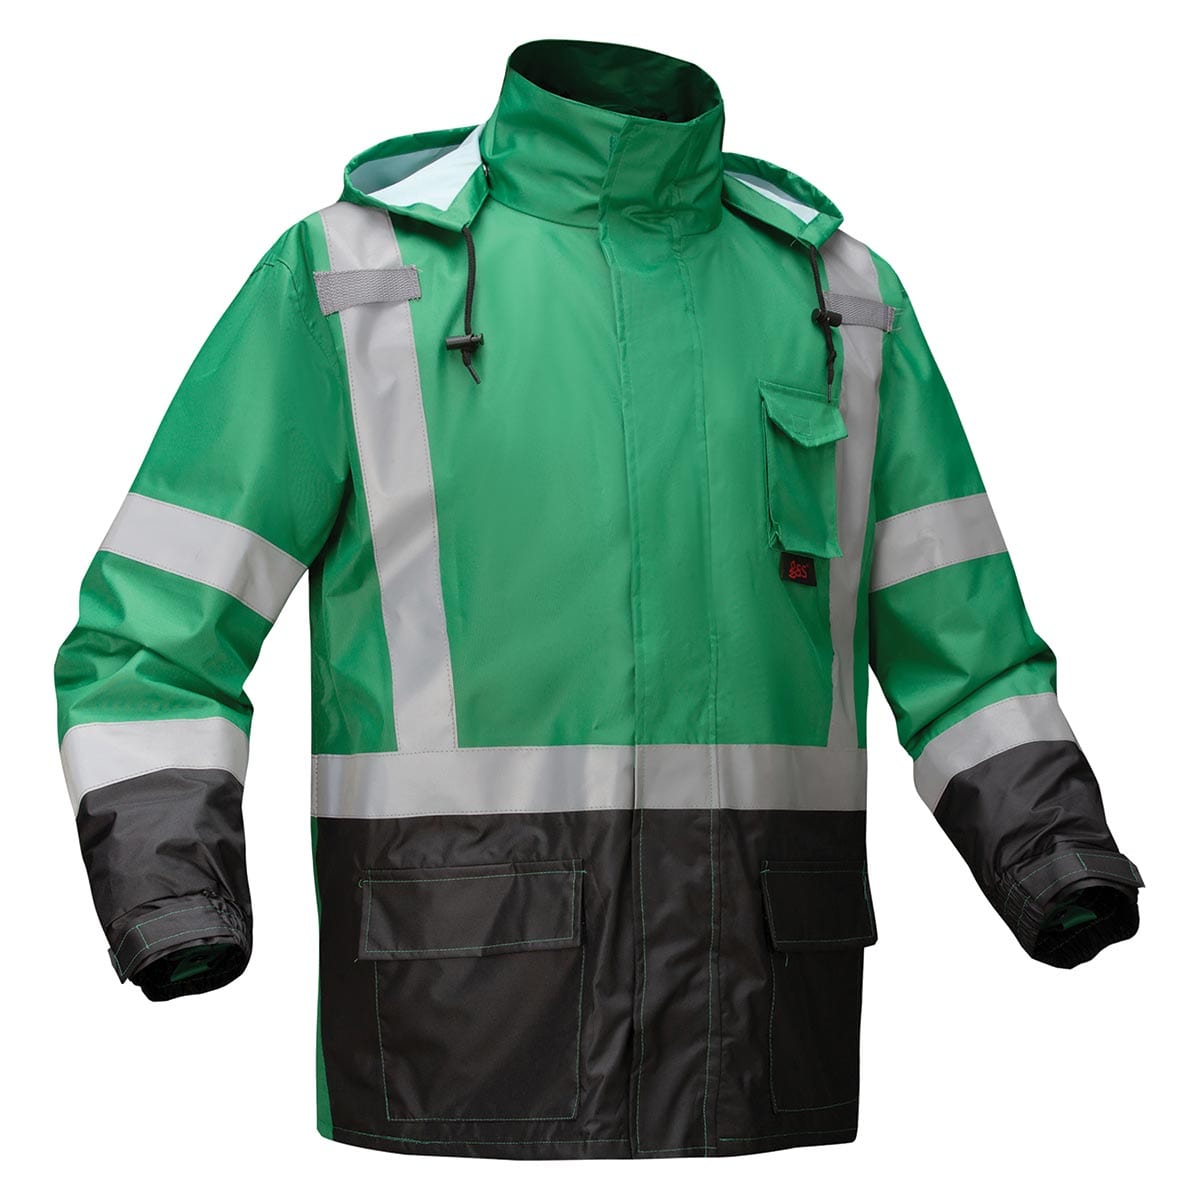 GSS Safety Enhanced Visibility Premium Hooded Rain Coat